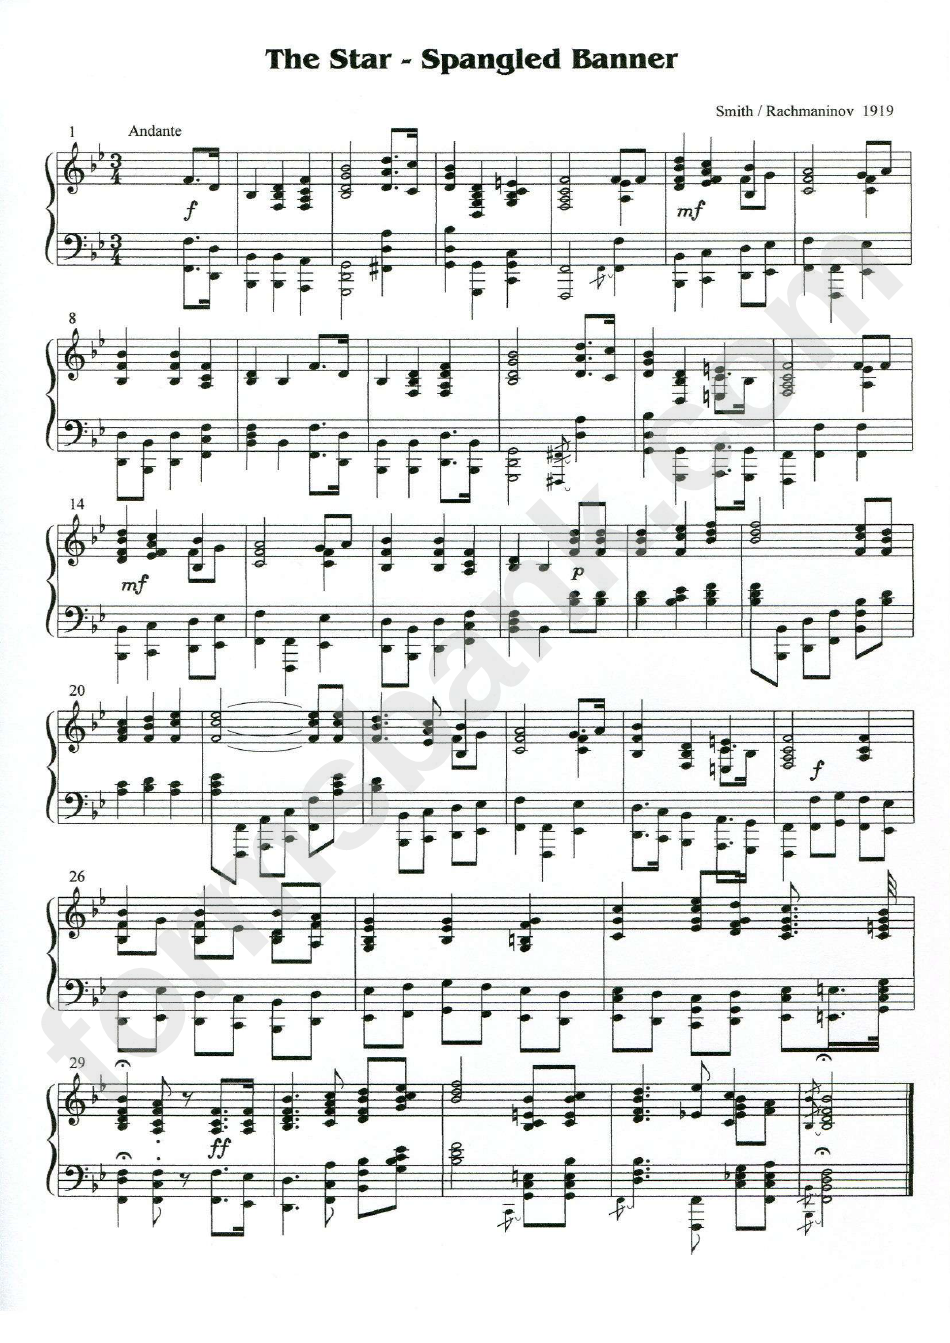 The Star-Spangled Bannrer - Piano Sheet Music